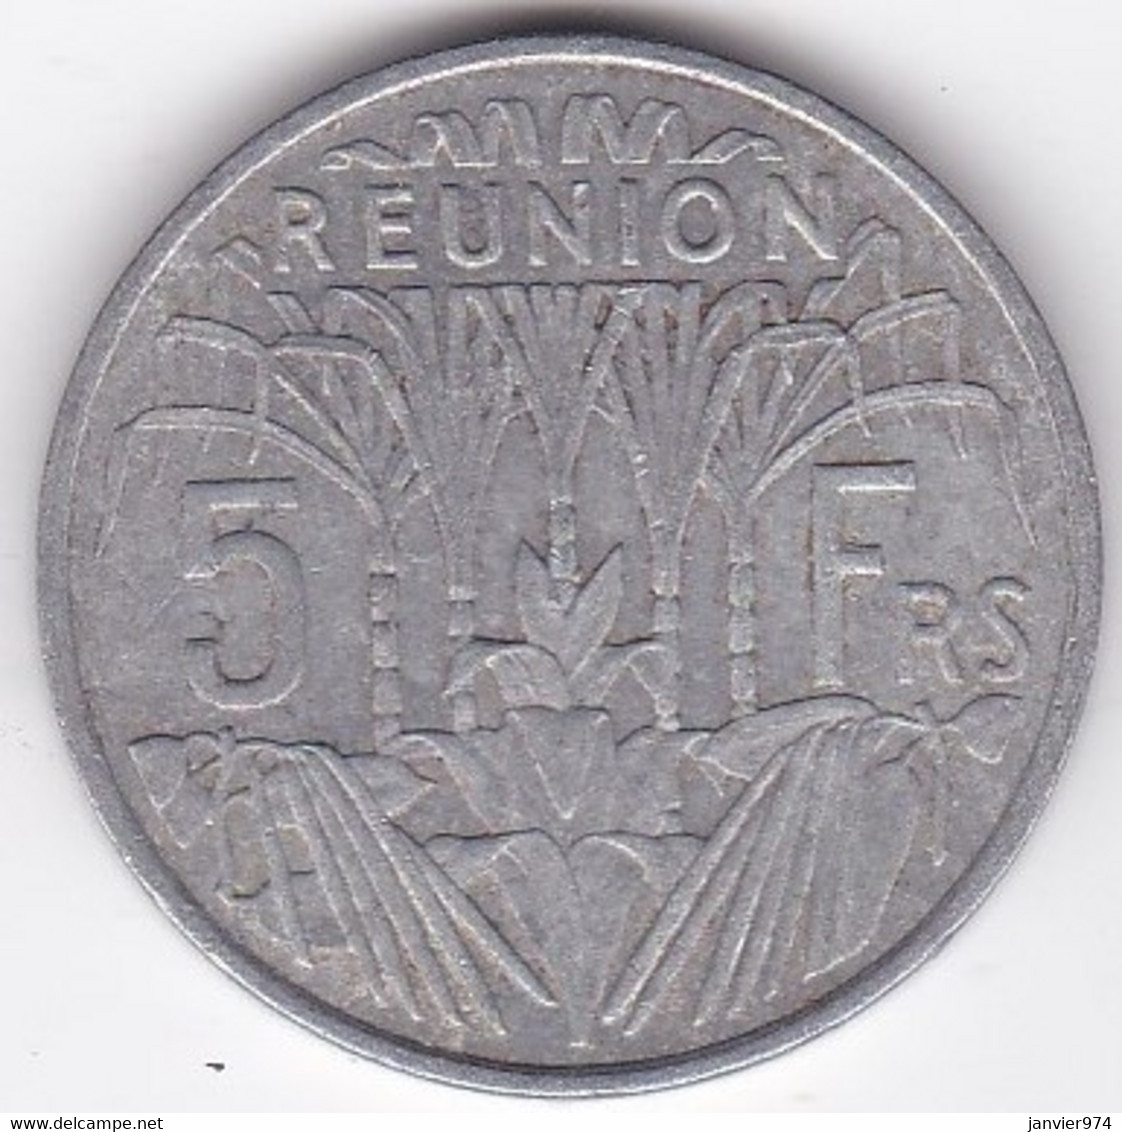 ILE DE LA REUNION. 5 FRANCS 1955 . En ALUMINIUM - Reunion